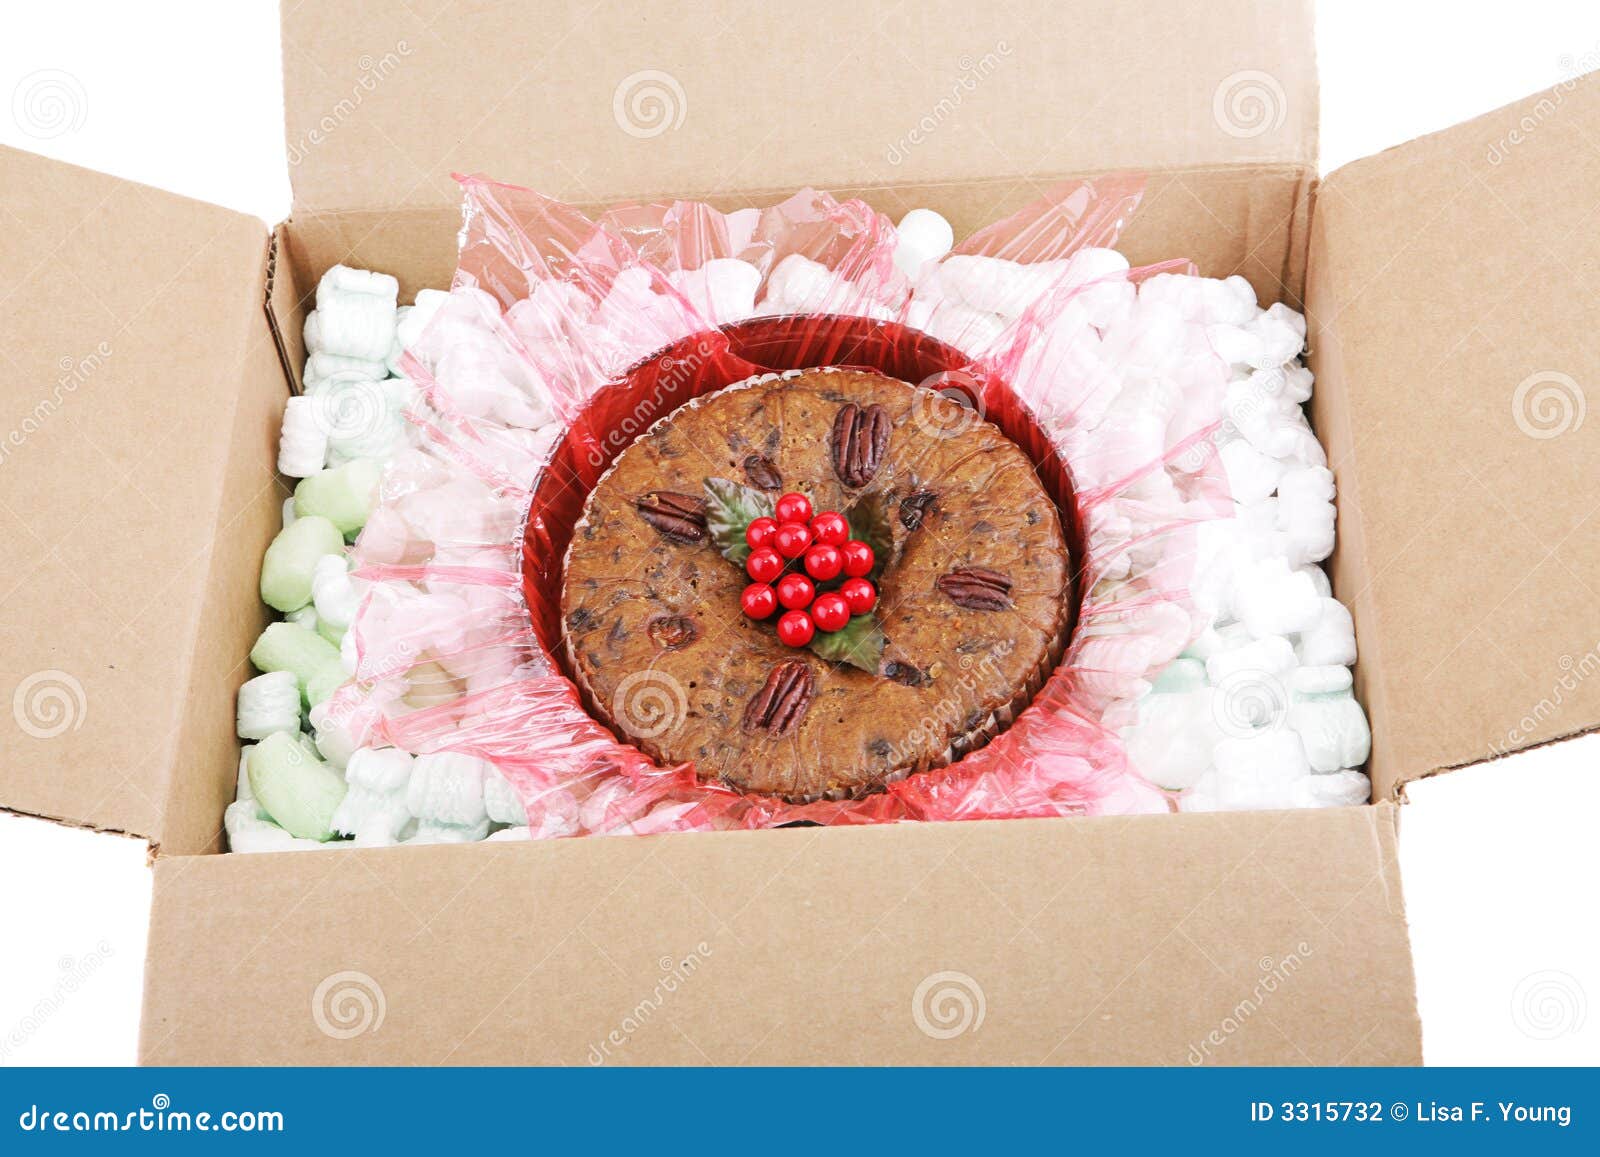 fruitcake for shipping